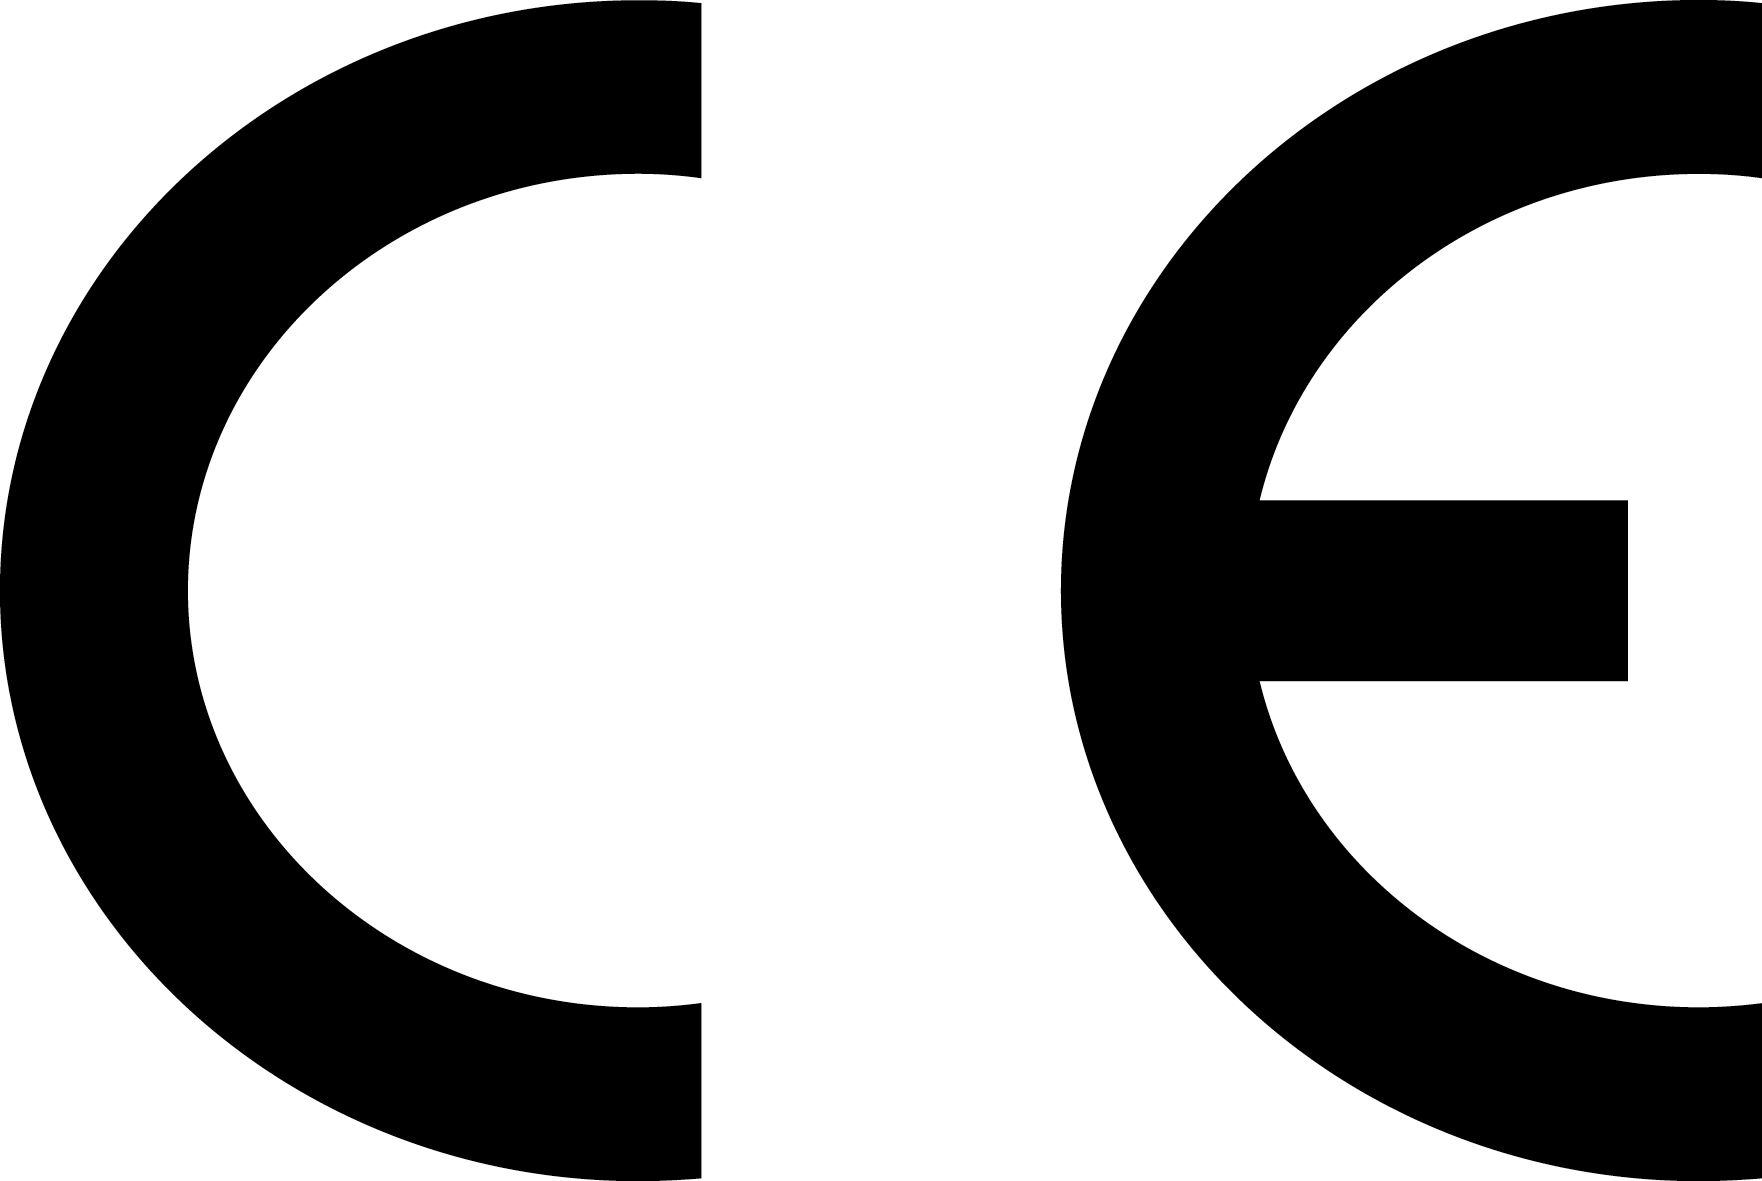 CE medical device symbol